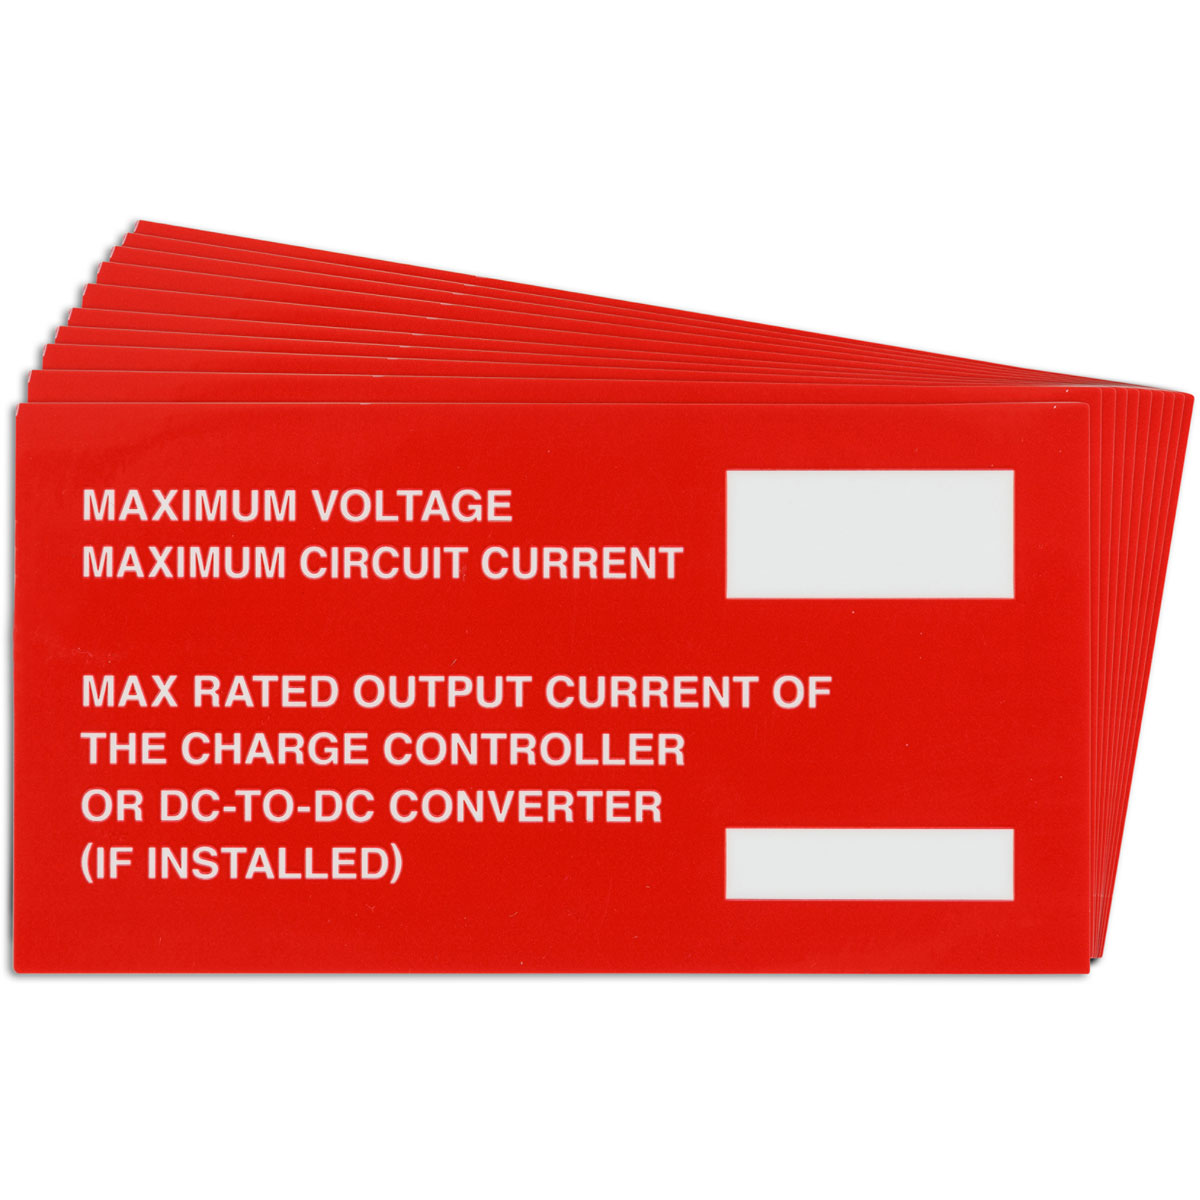 Pre-Printed SOLAR MAX VOLTAGE Warning Labels